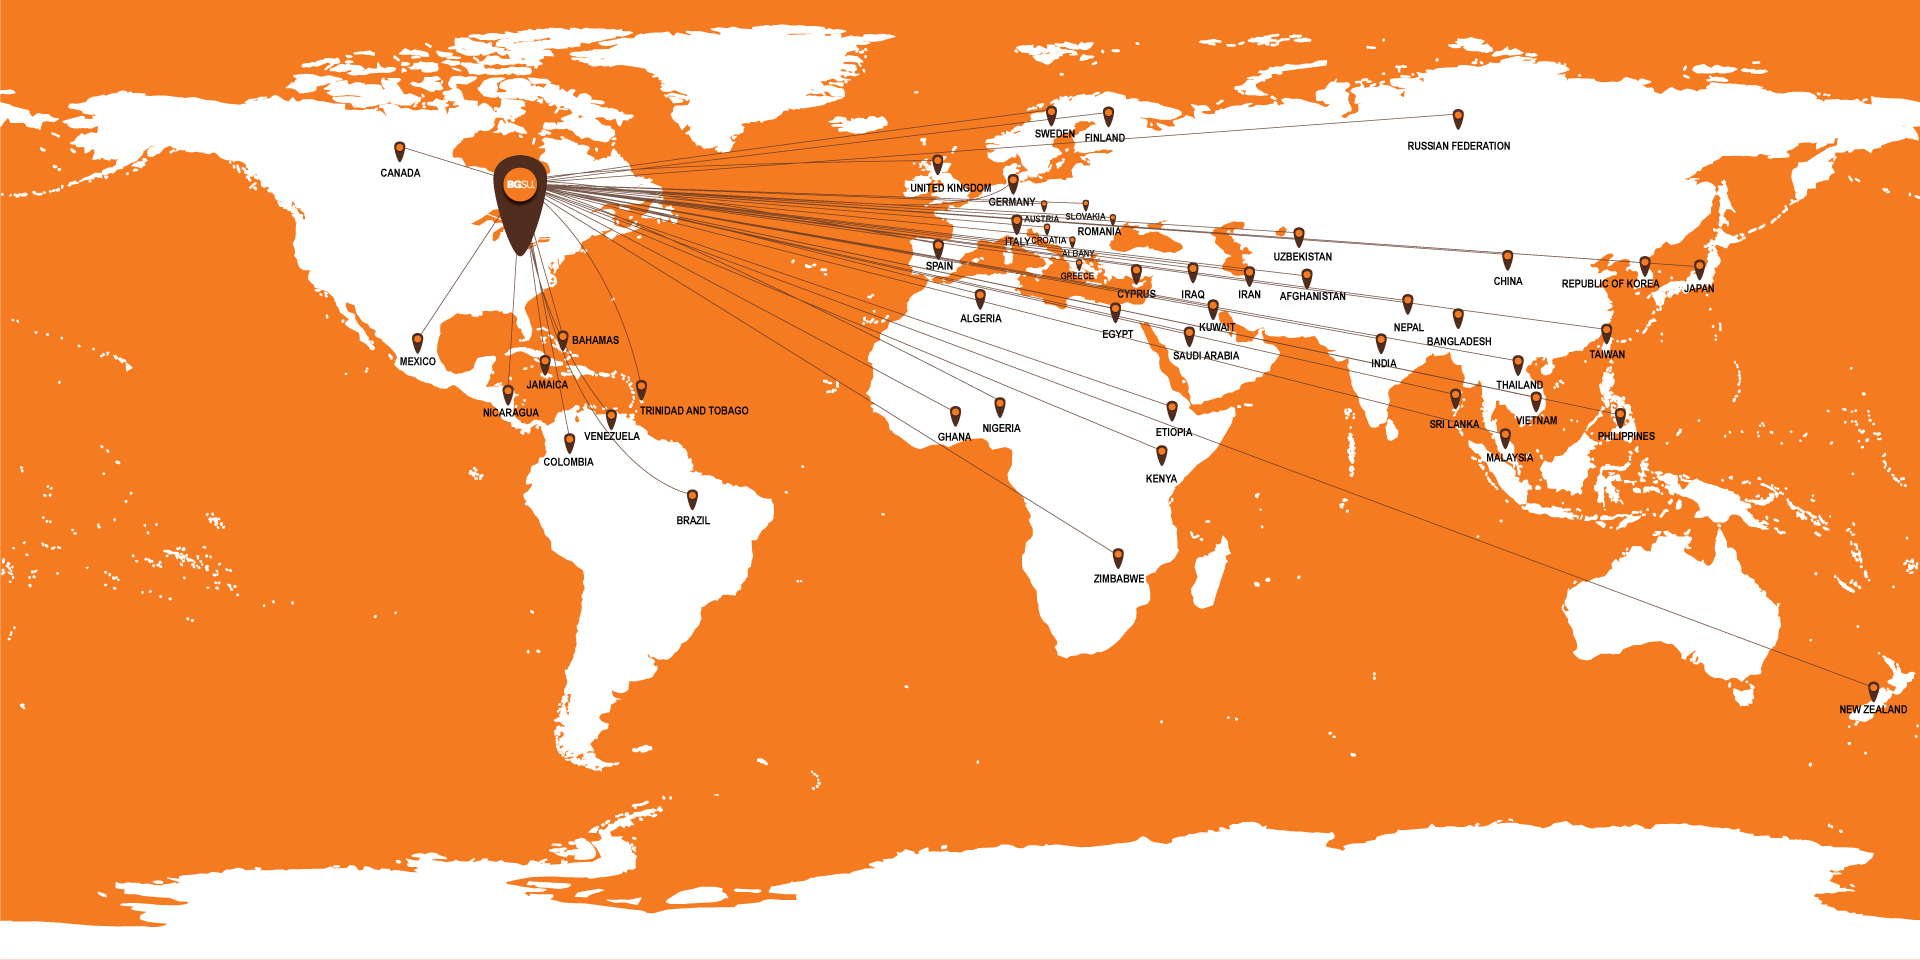 bgsu international student map